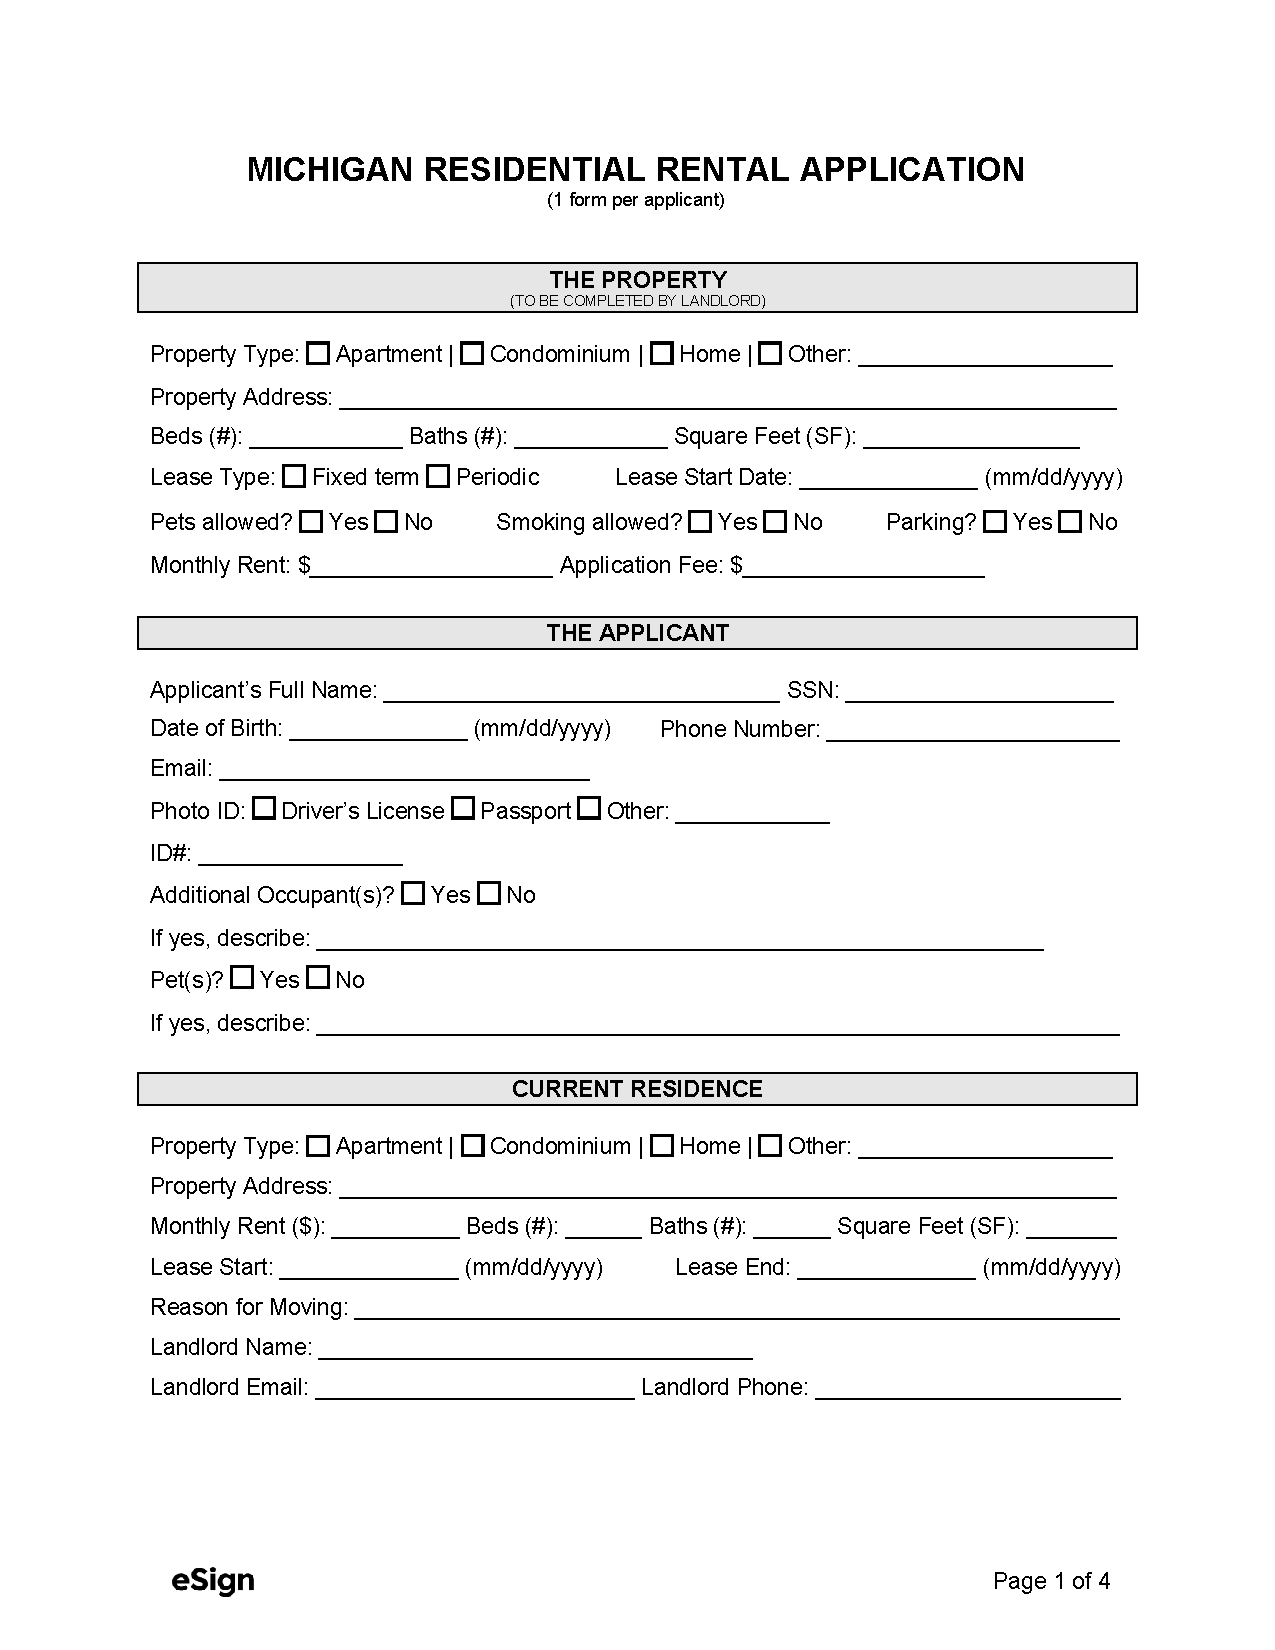 Free Michigan Residential Rental Application Form - PDF | Word